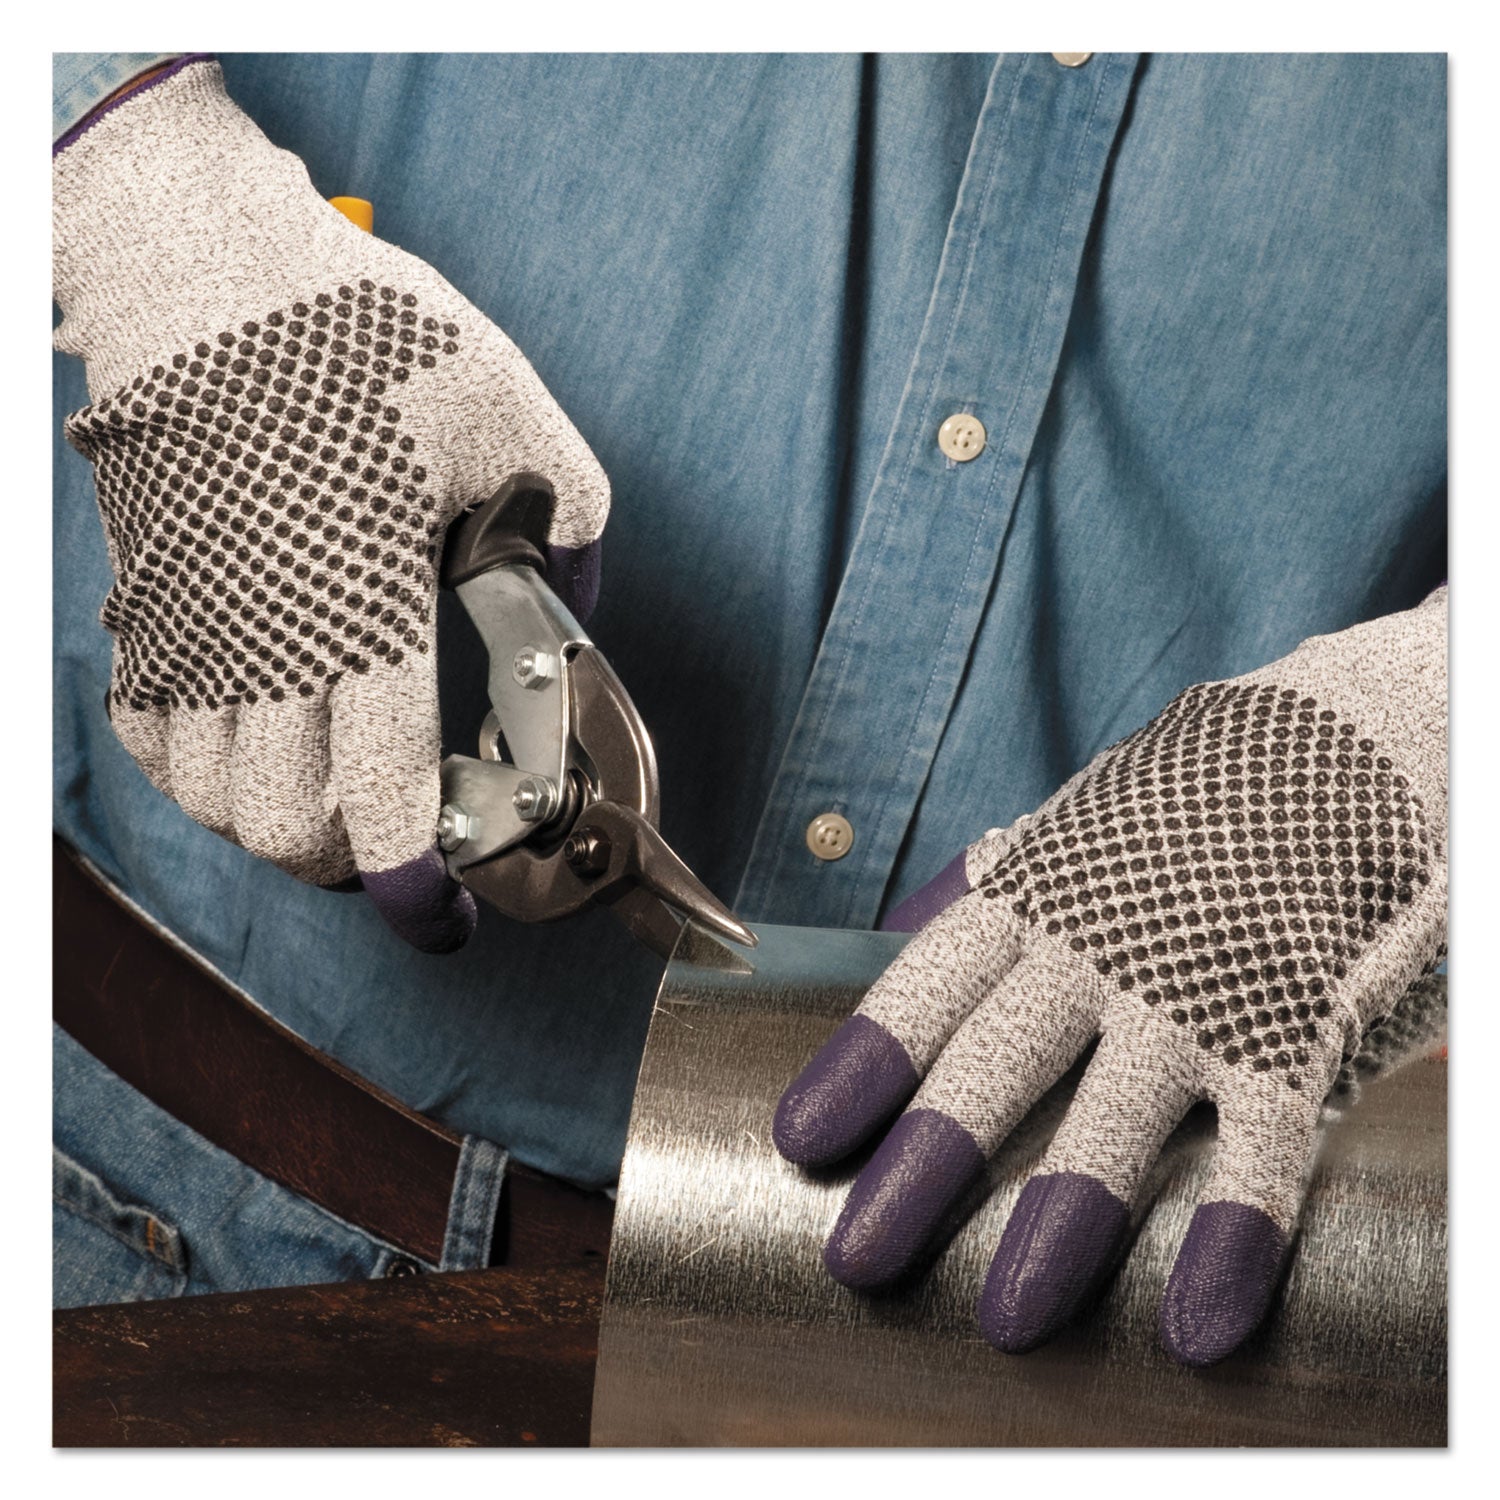 g60-purple-nitrile-gloves-230-mm-length-medium-size-8-black-white-pair_kcc97431 - 3